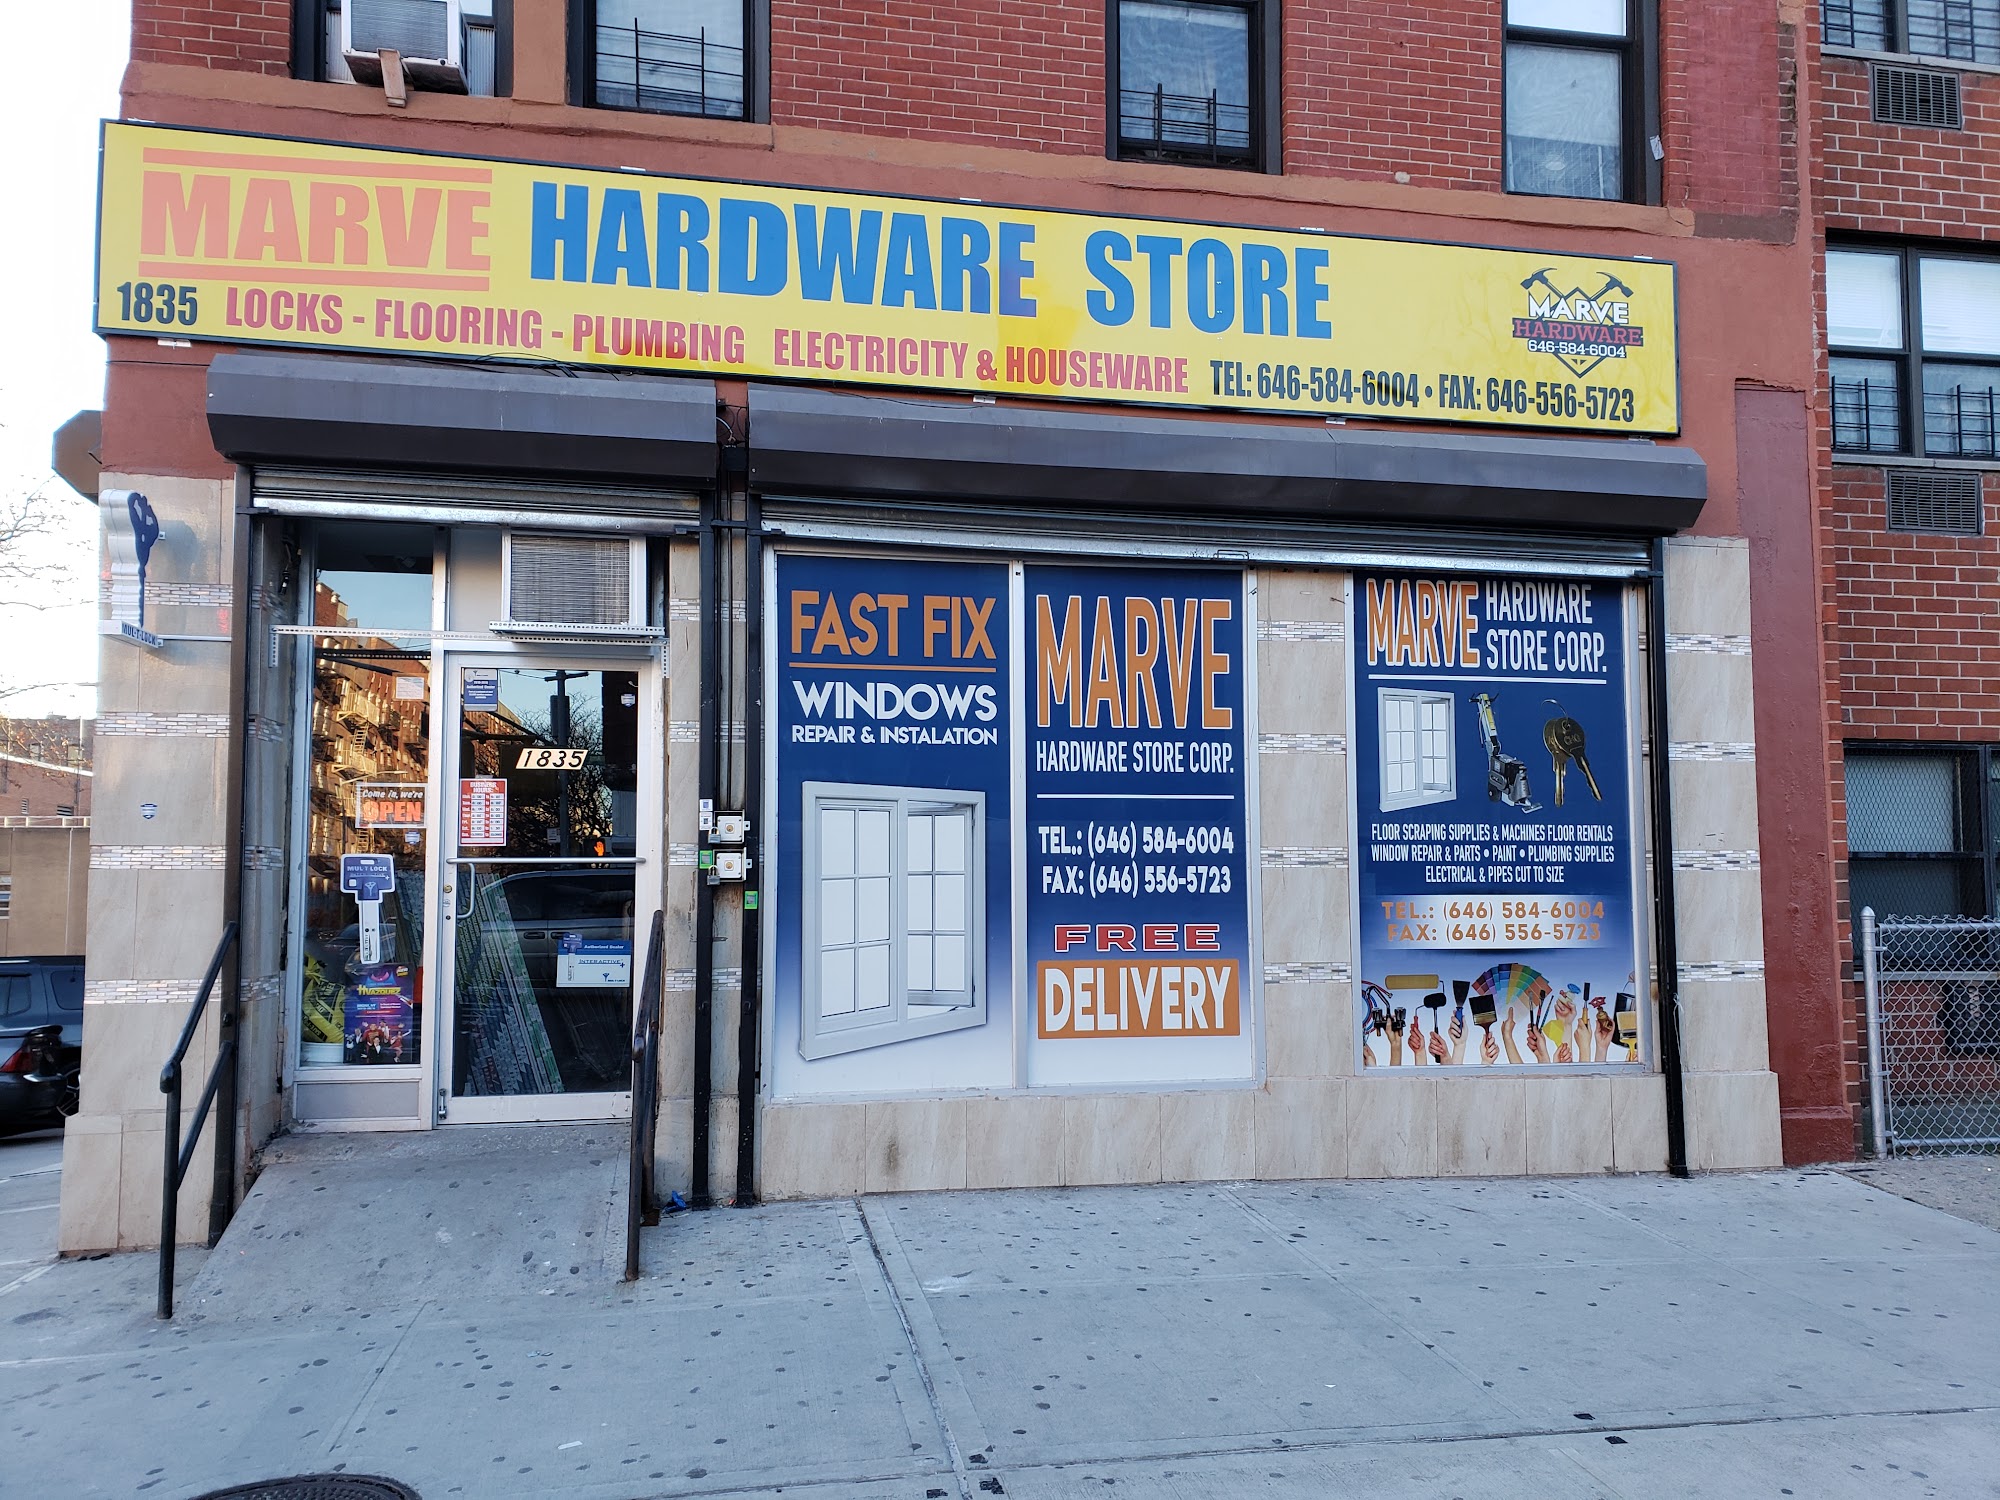 Marve Hardware Store